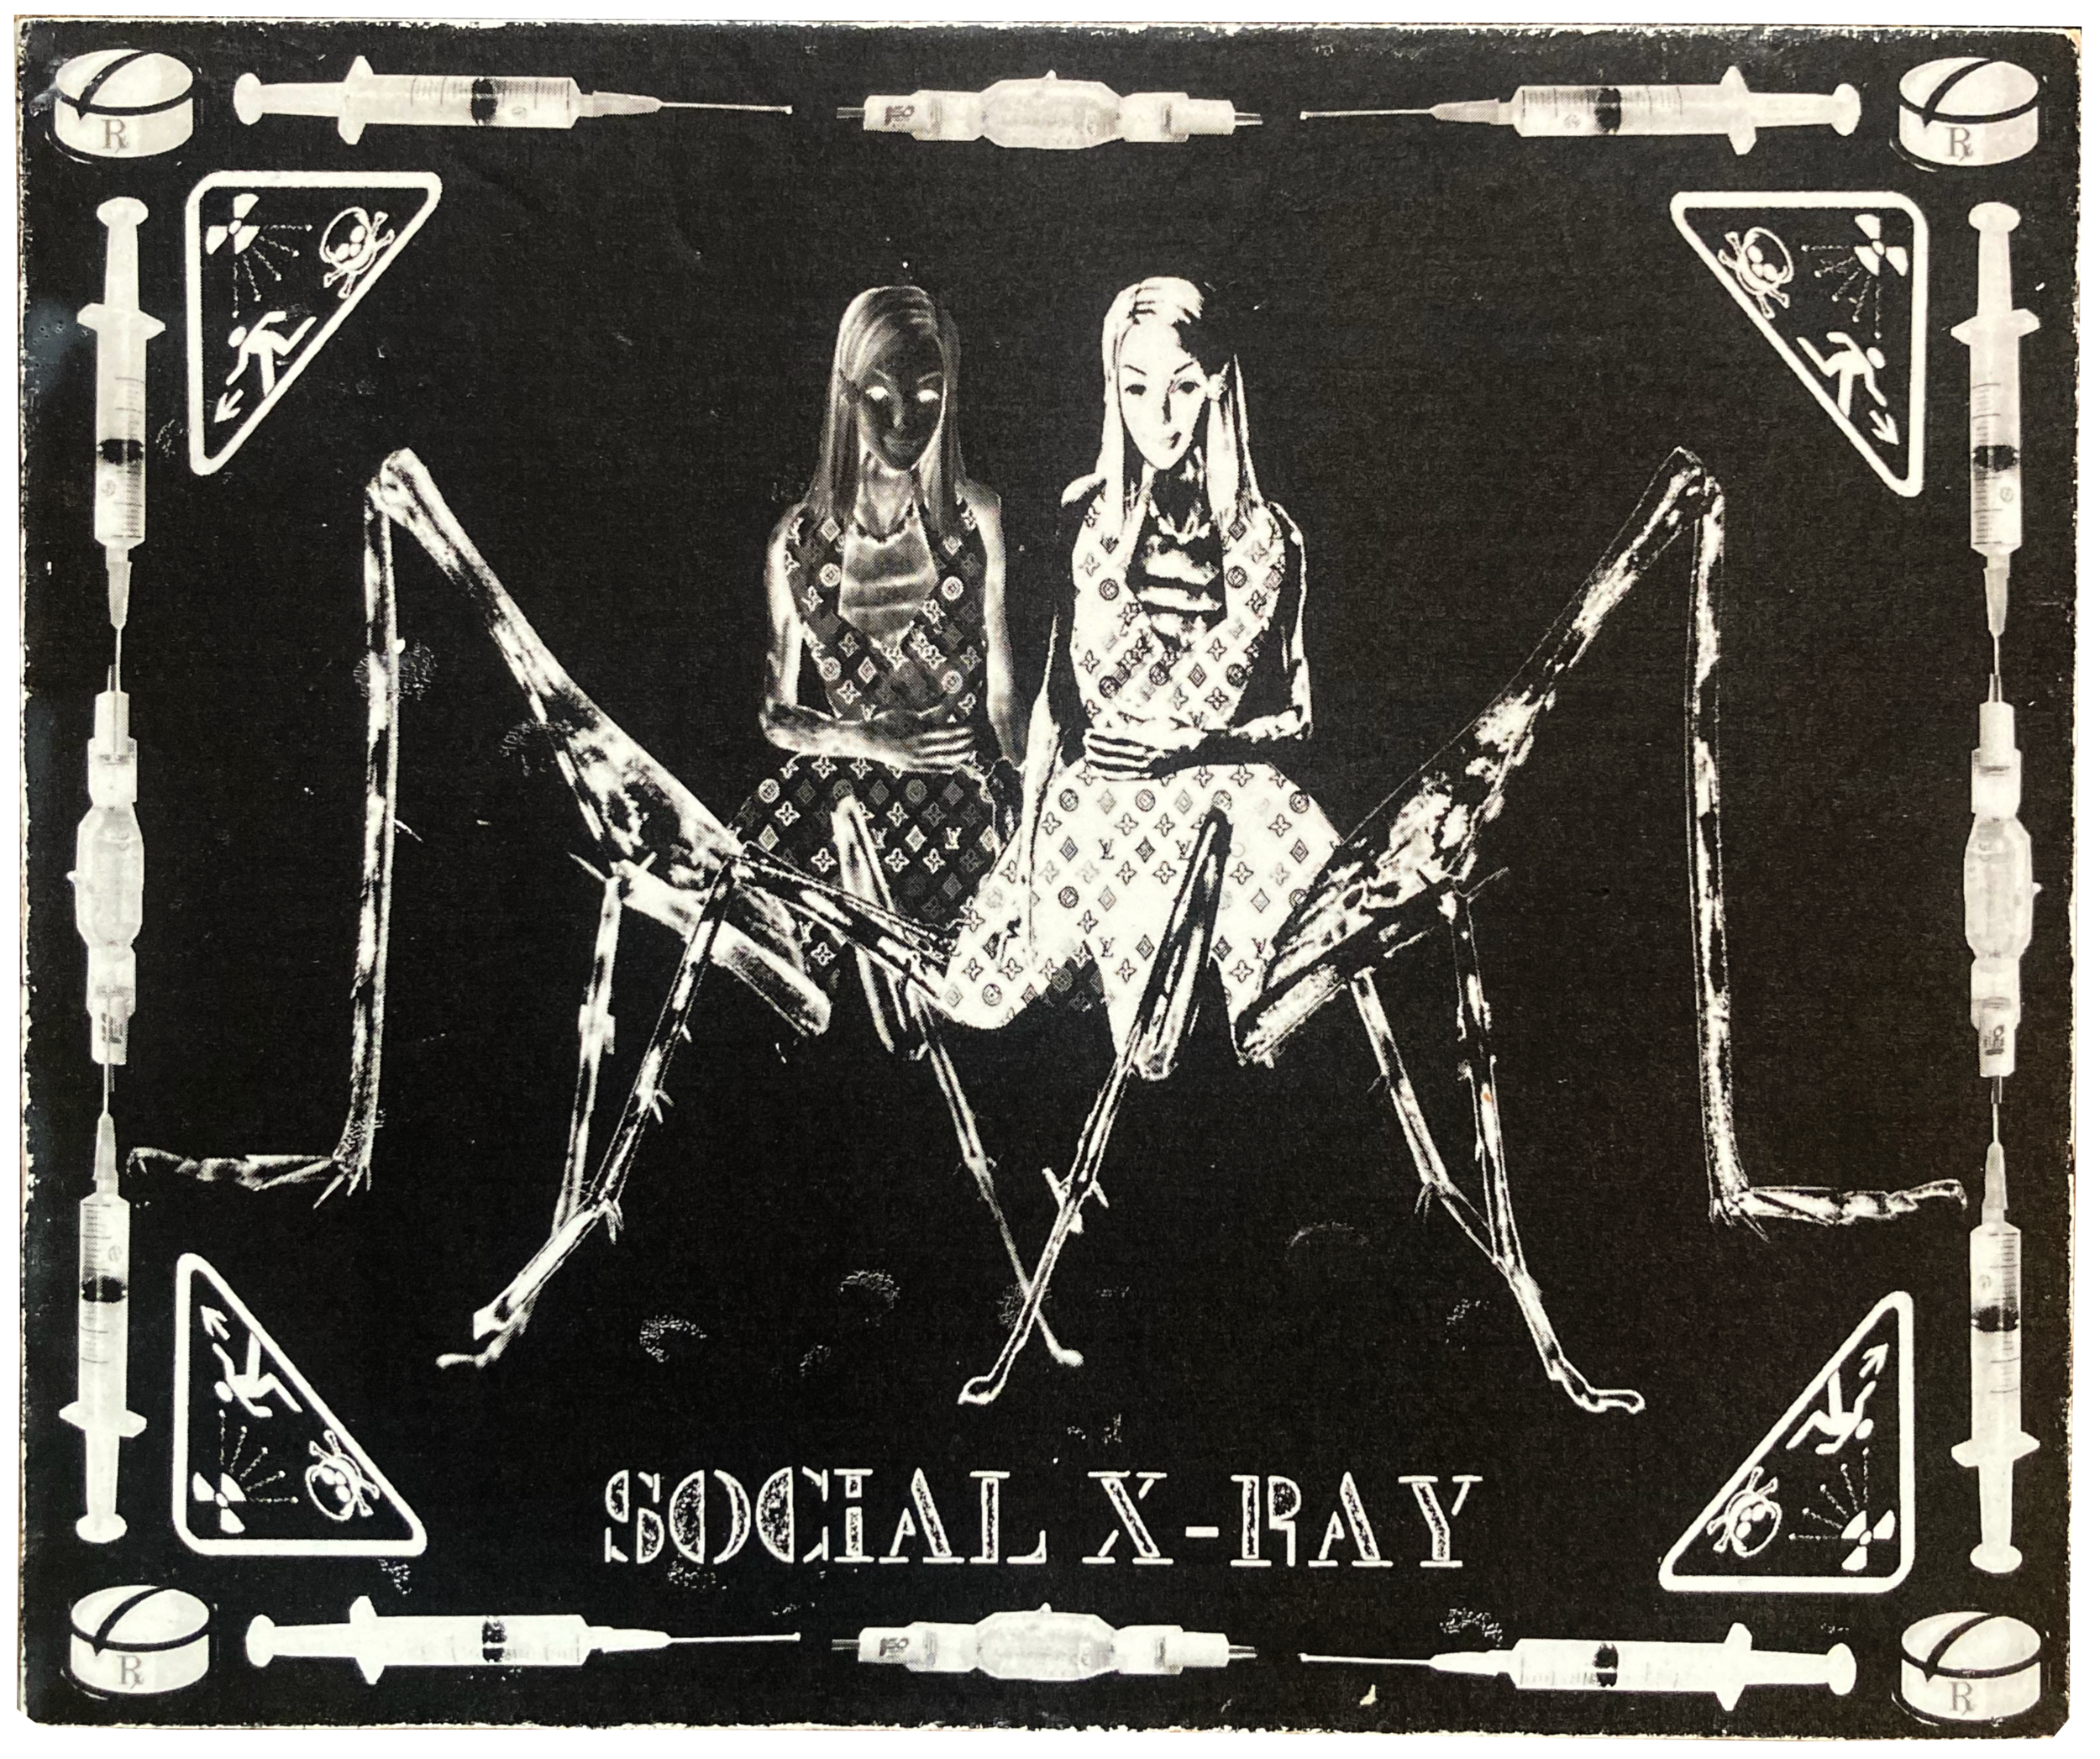 SOCIAL X-RAY